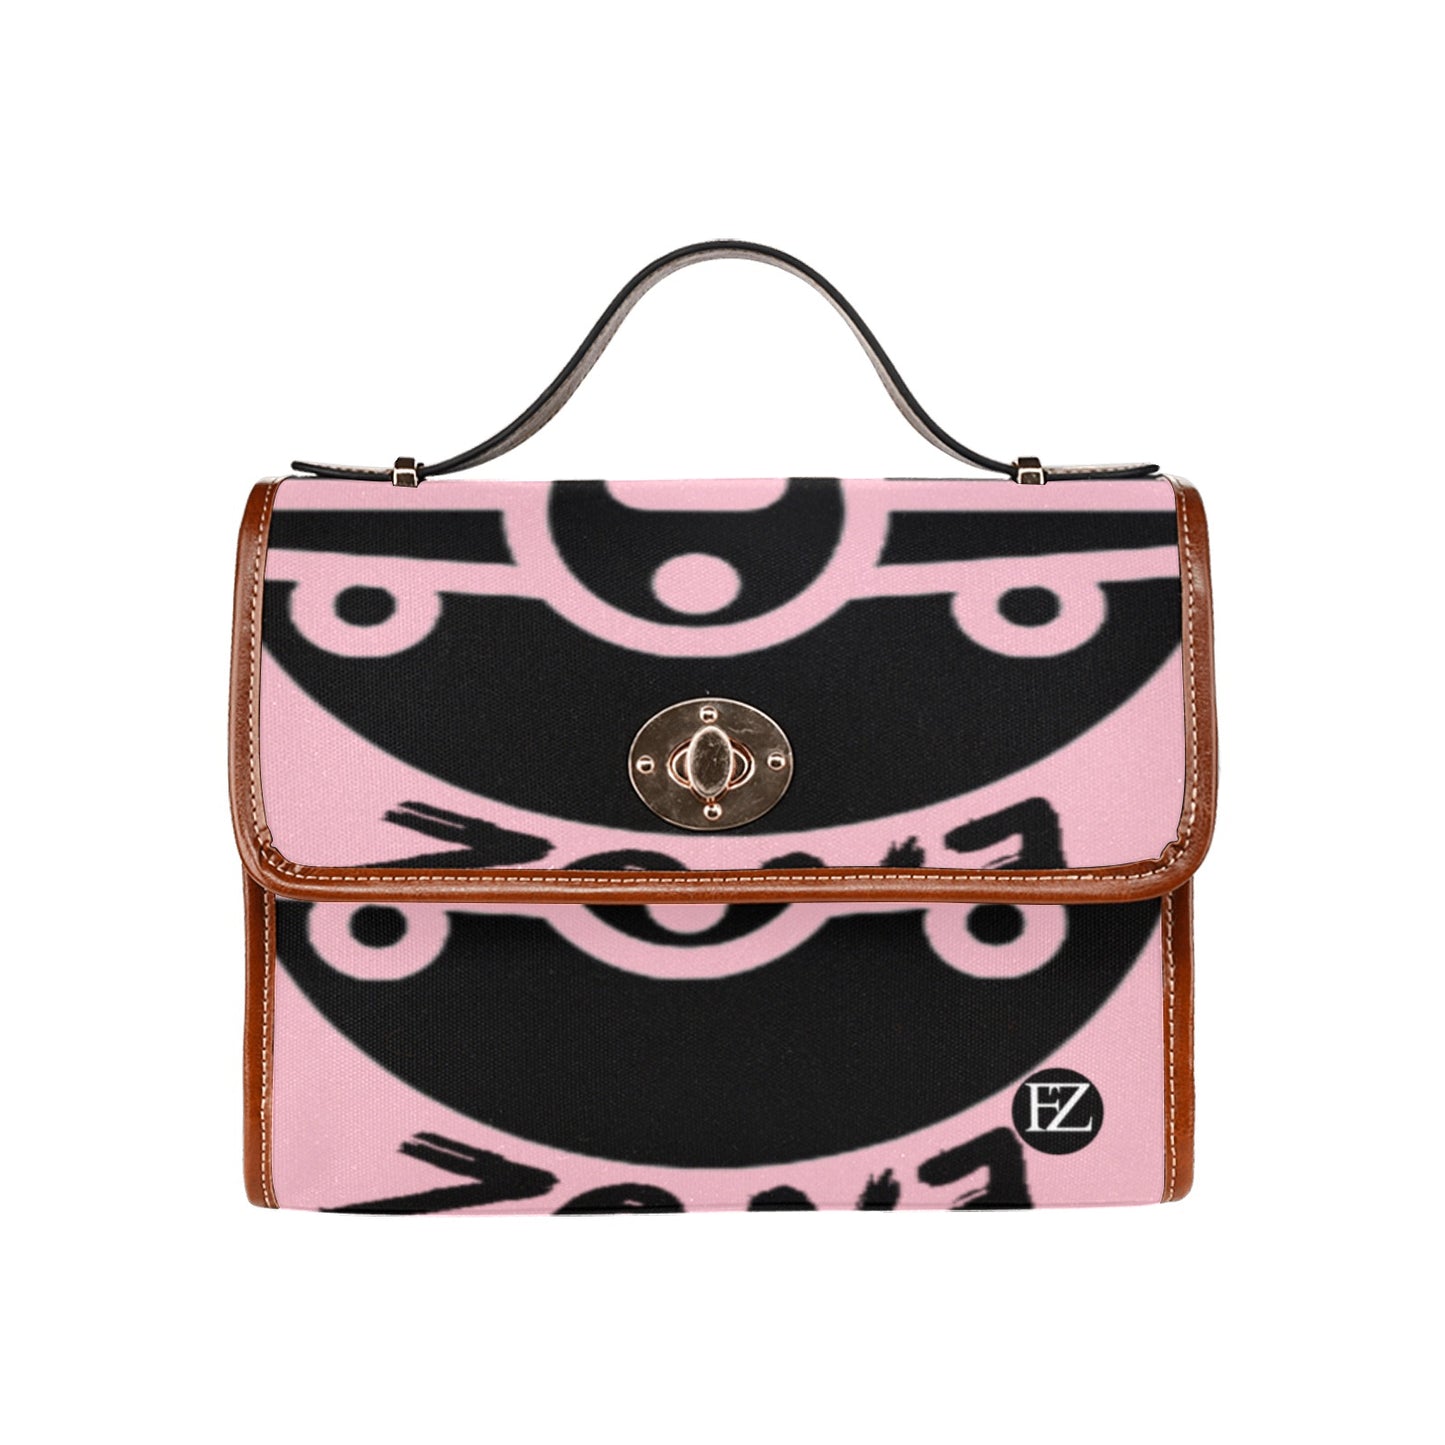 fz women's handbag - abstract